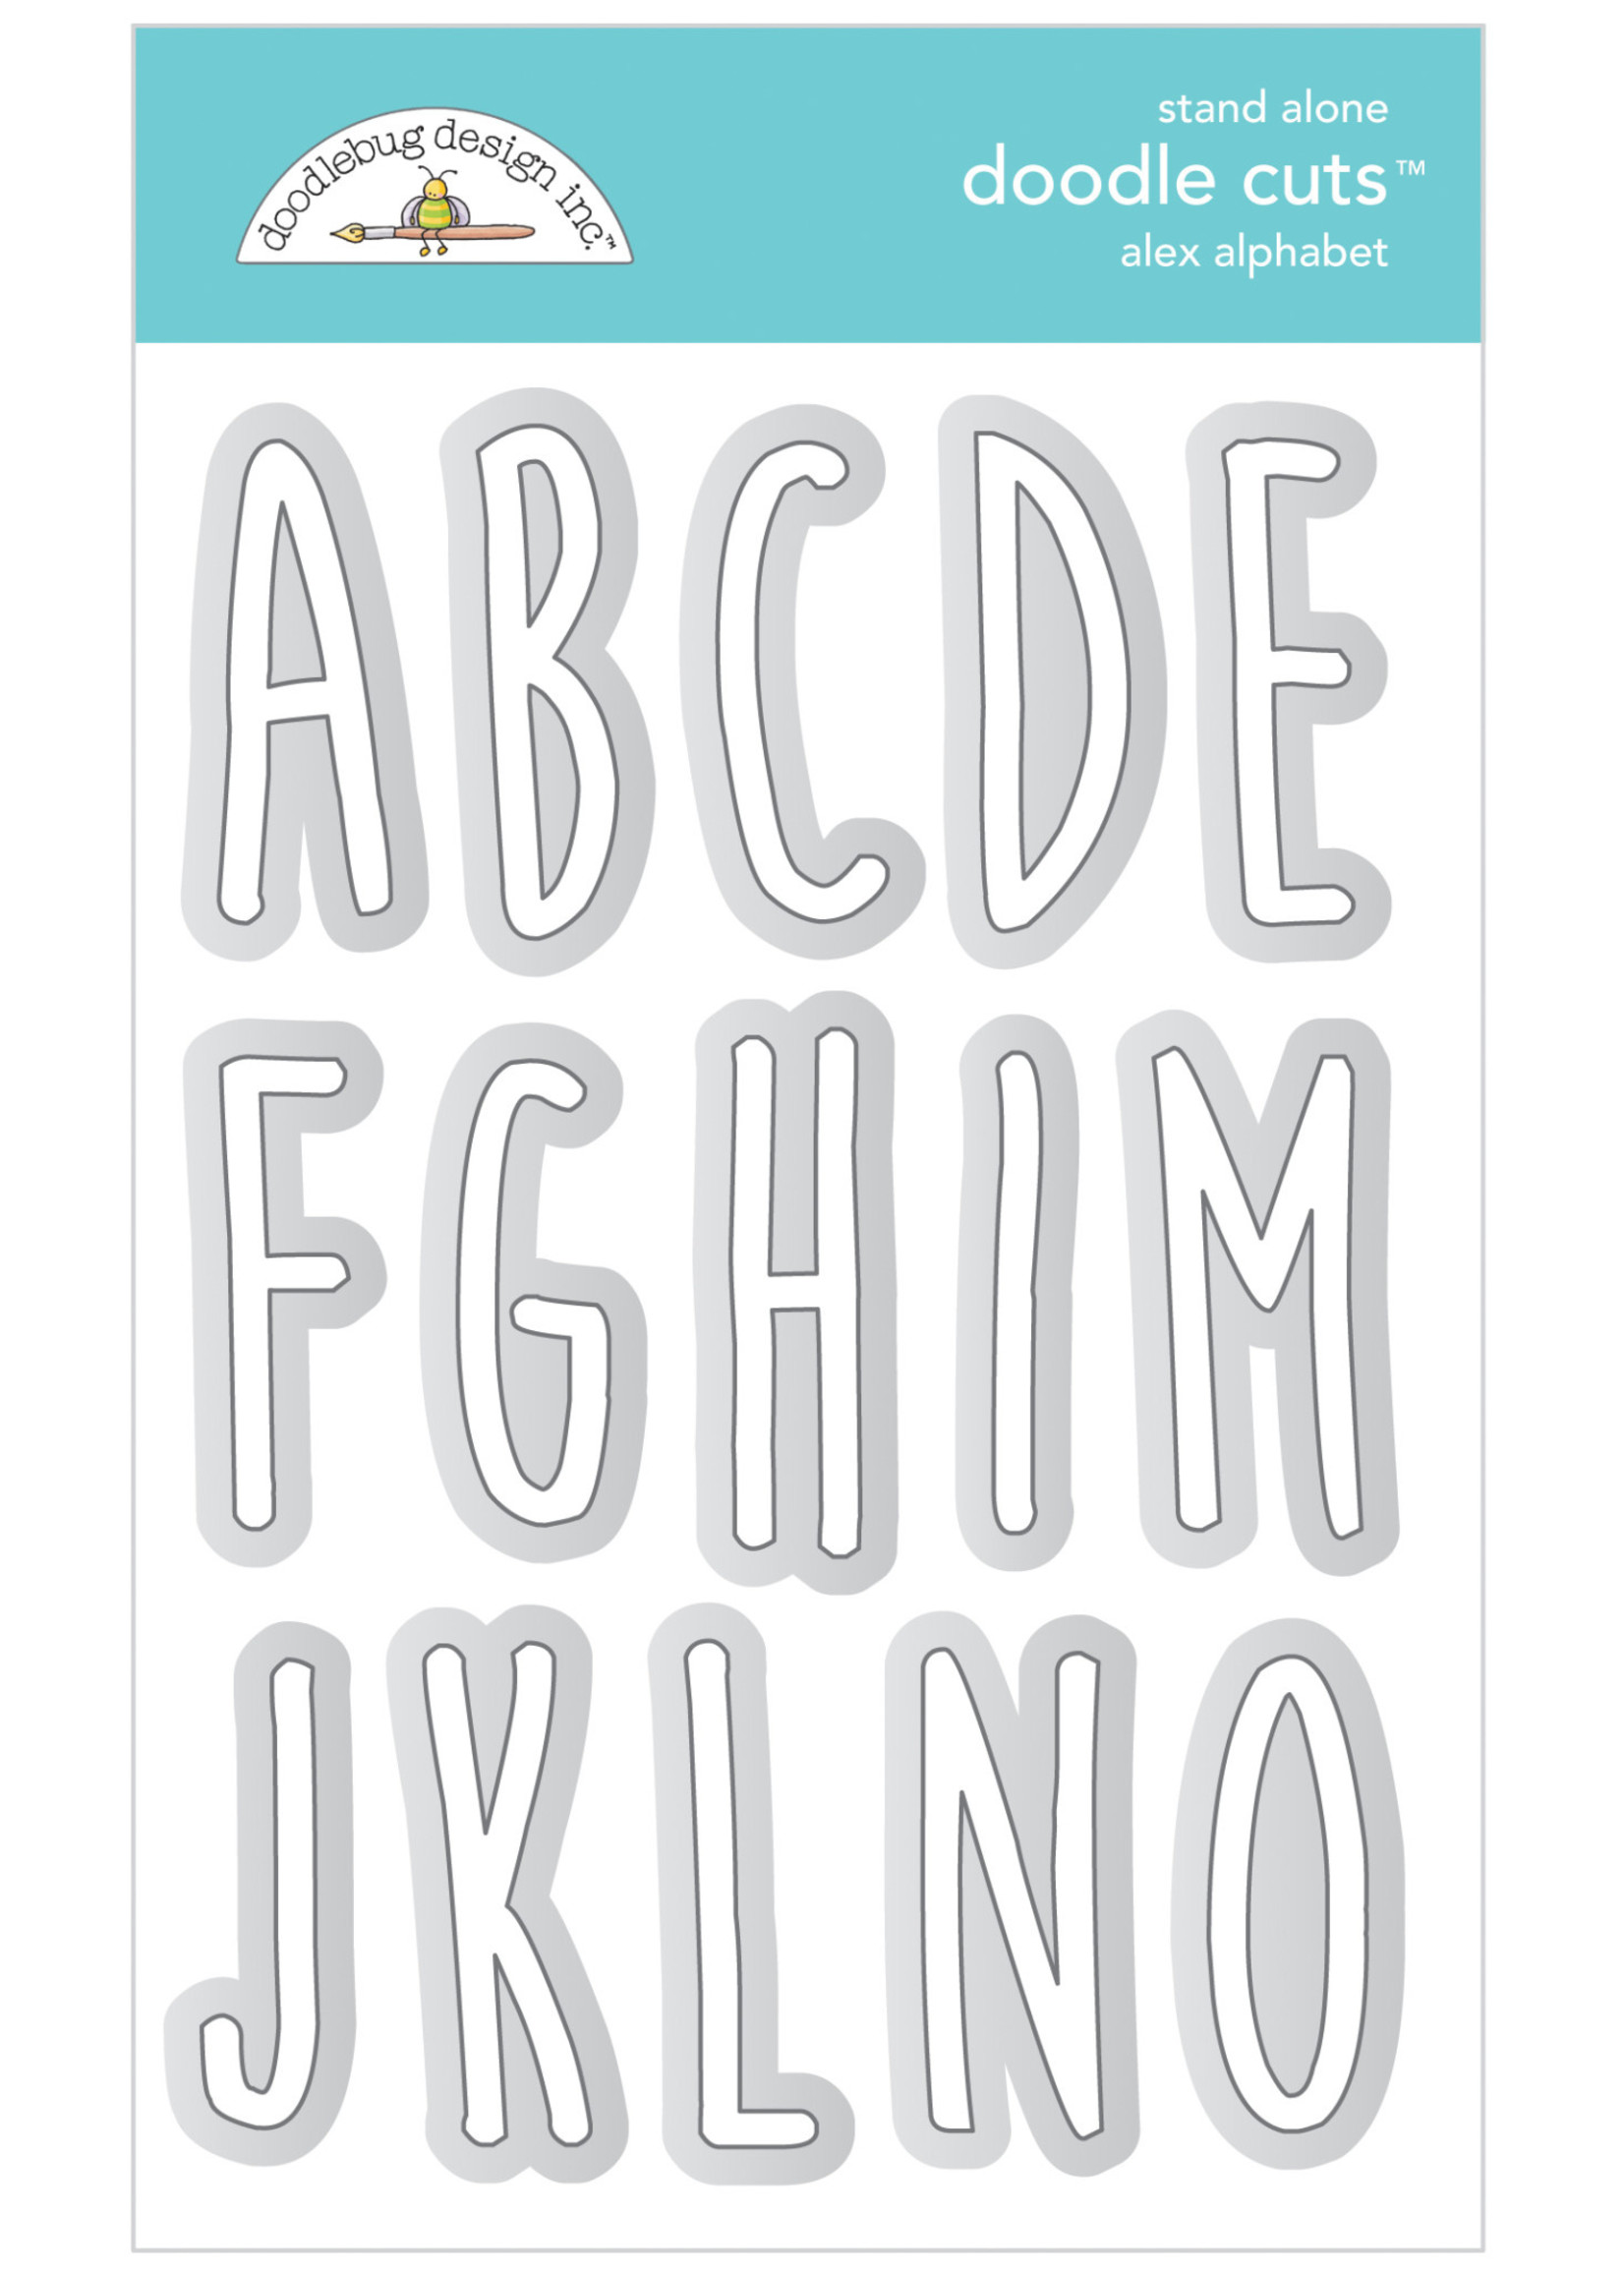 DOODLEBUG Doodlebug alex alphabet doodle cuts